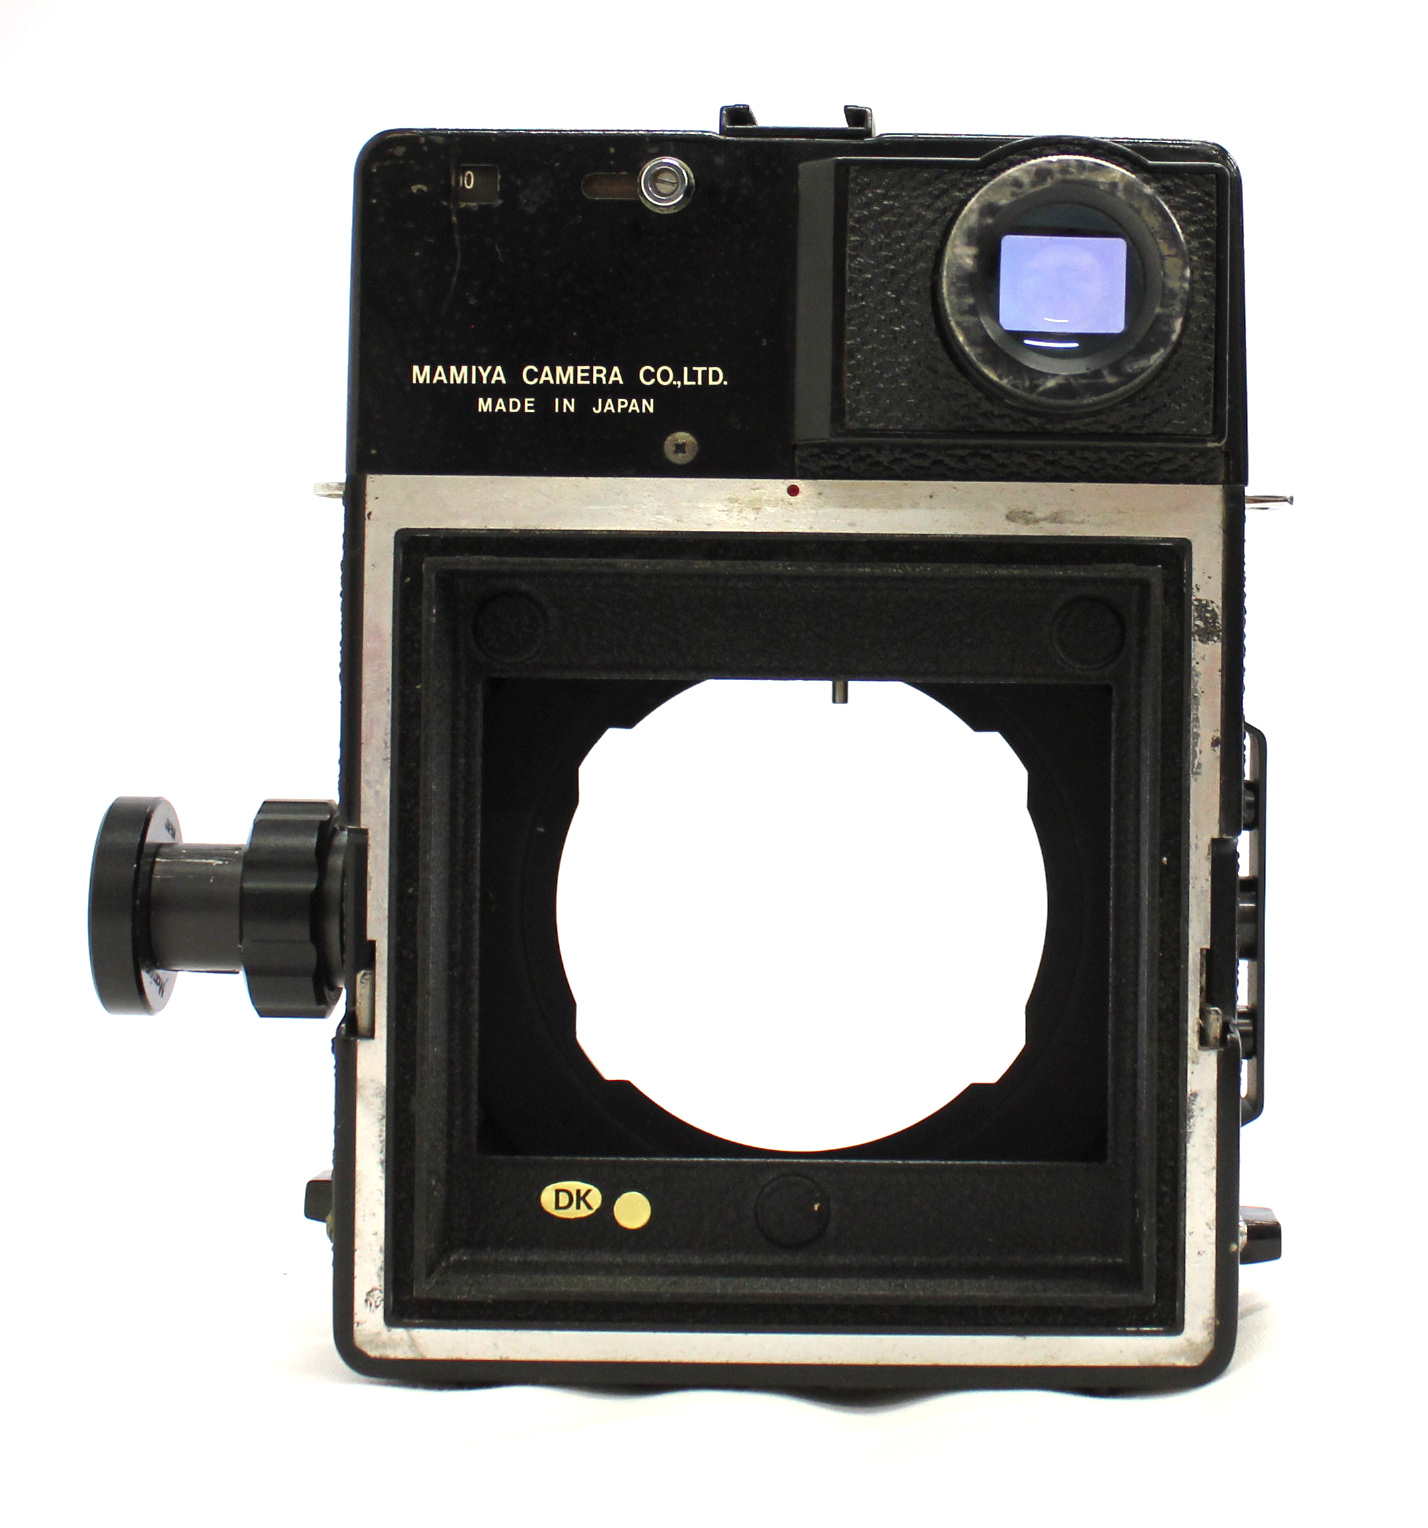 Mamiya Universal Press with Sekor P 127mm F/4.7 Lens & Polaroid